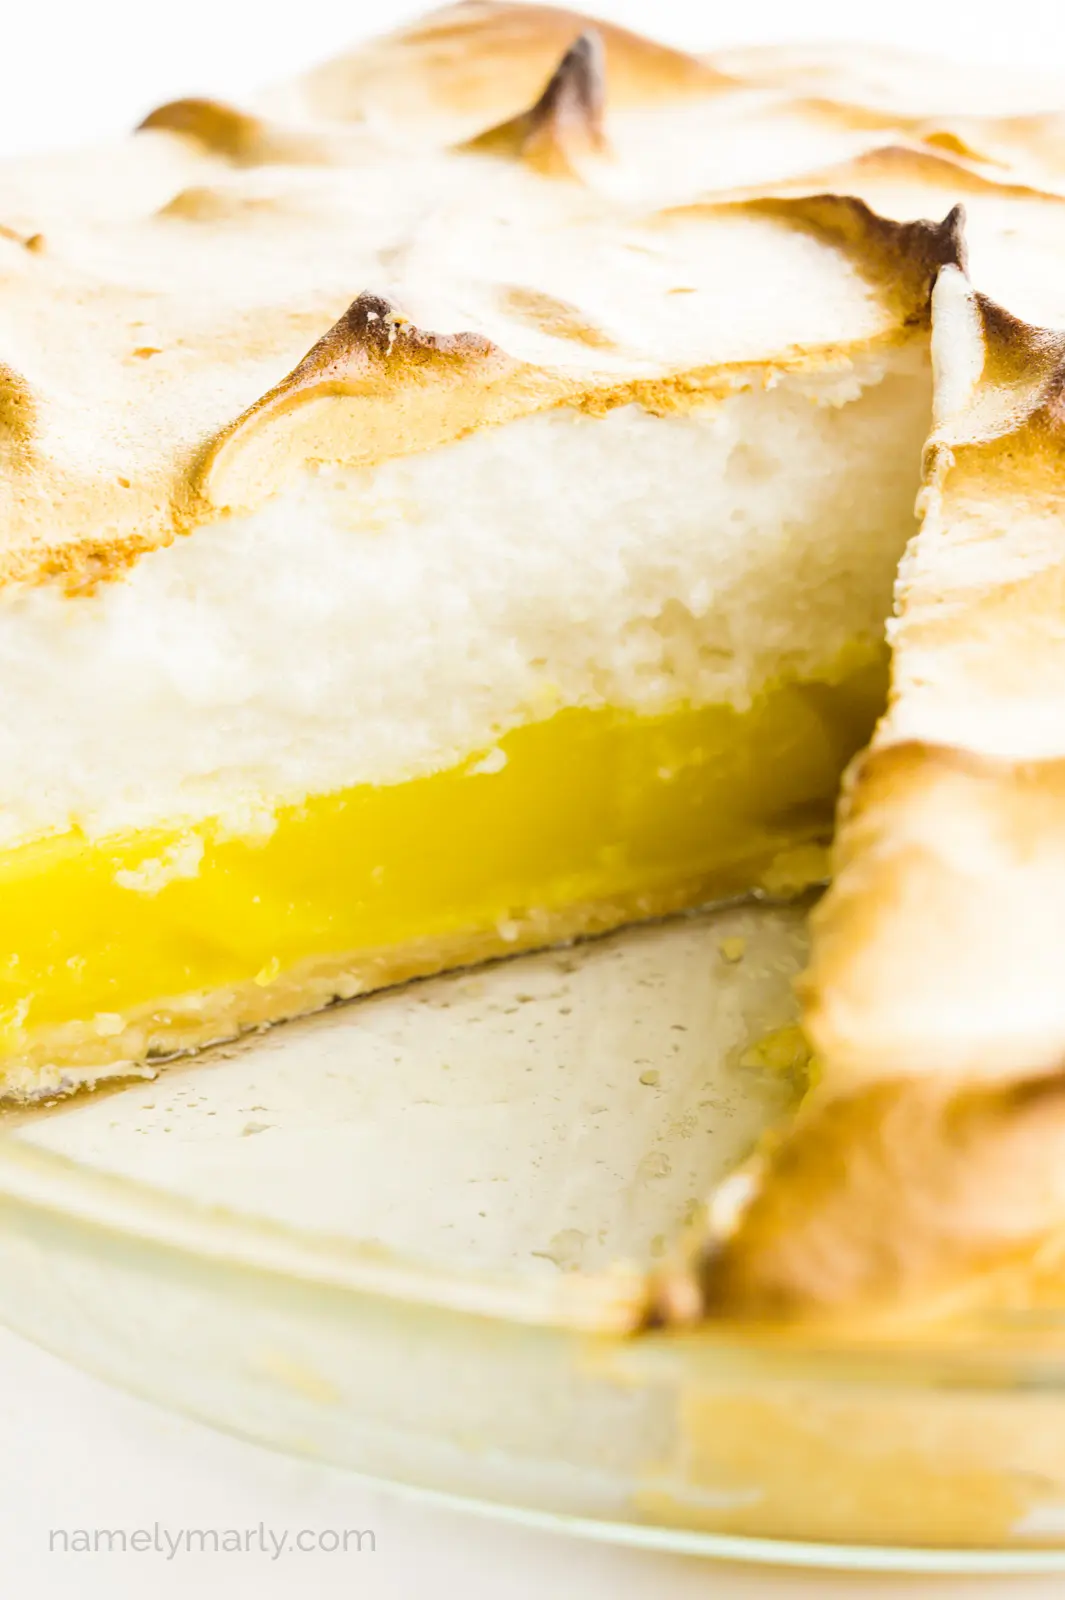 A lemon meringue pie has a slice cut out, showcasing layers of lemon curd and meringue on top.